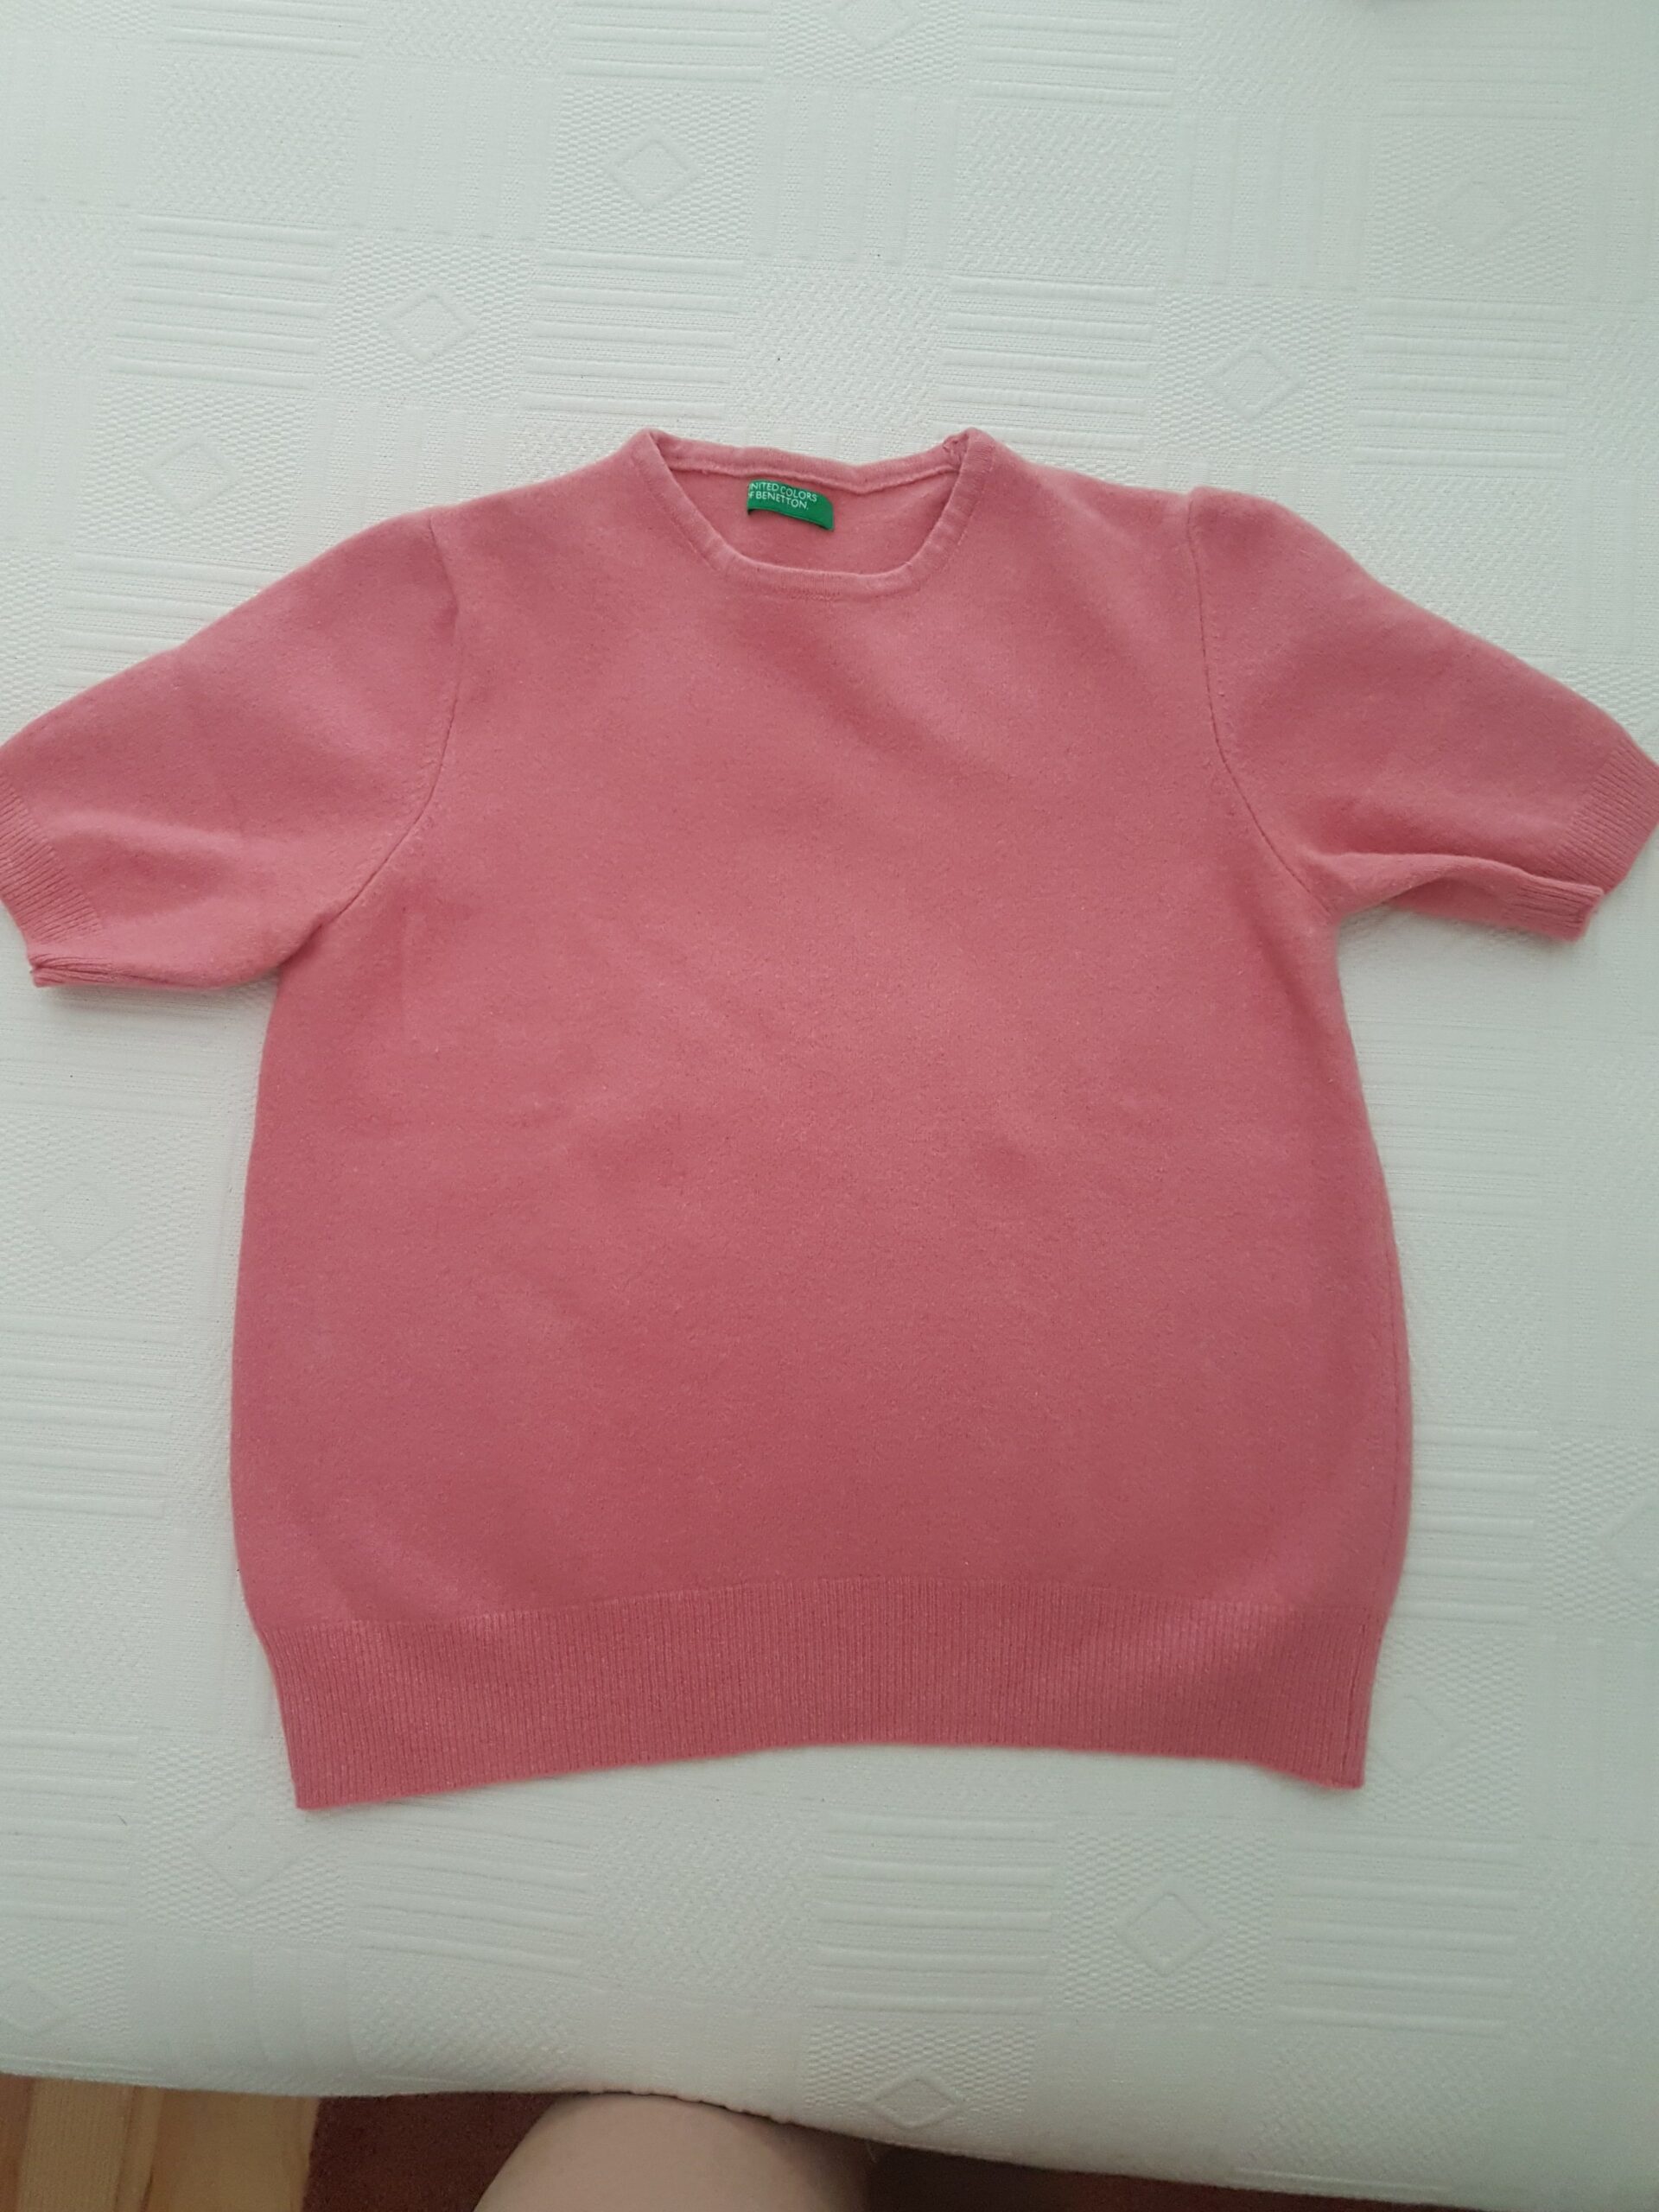 T-shirt Rosa, marca benetton, tamanho S 1